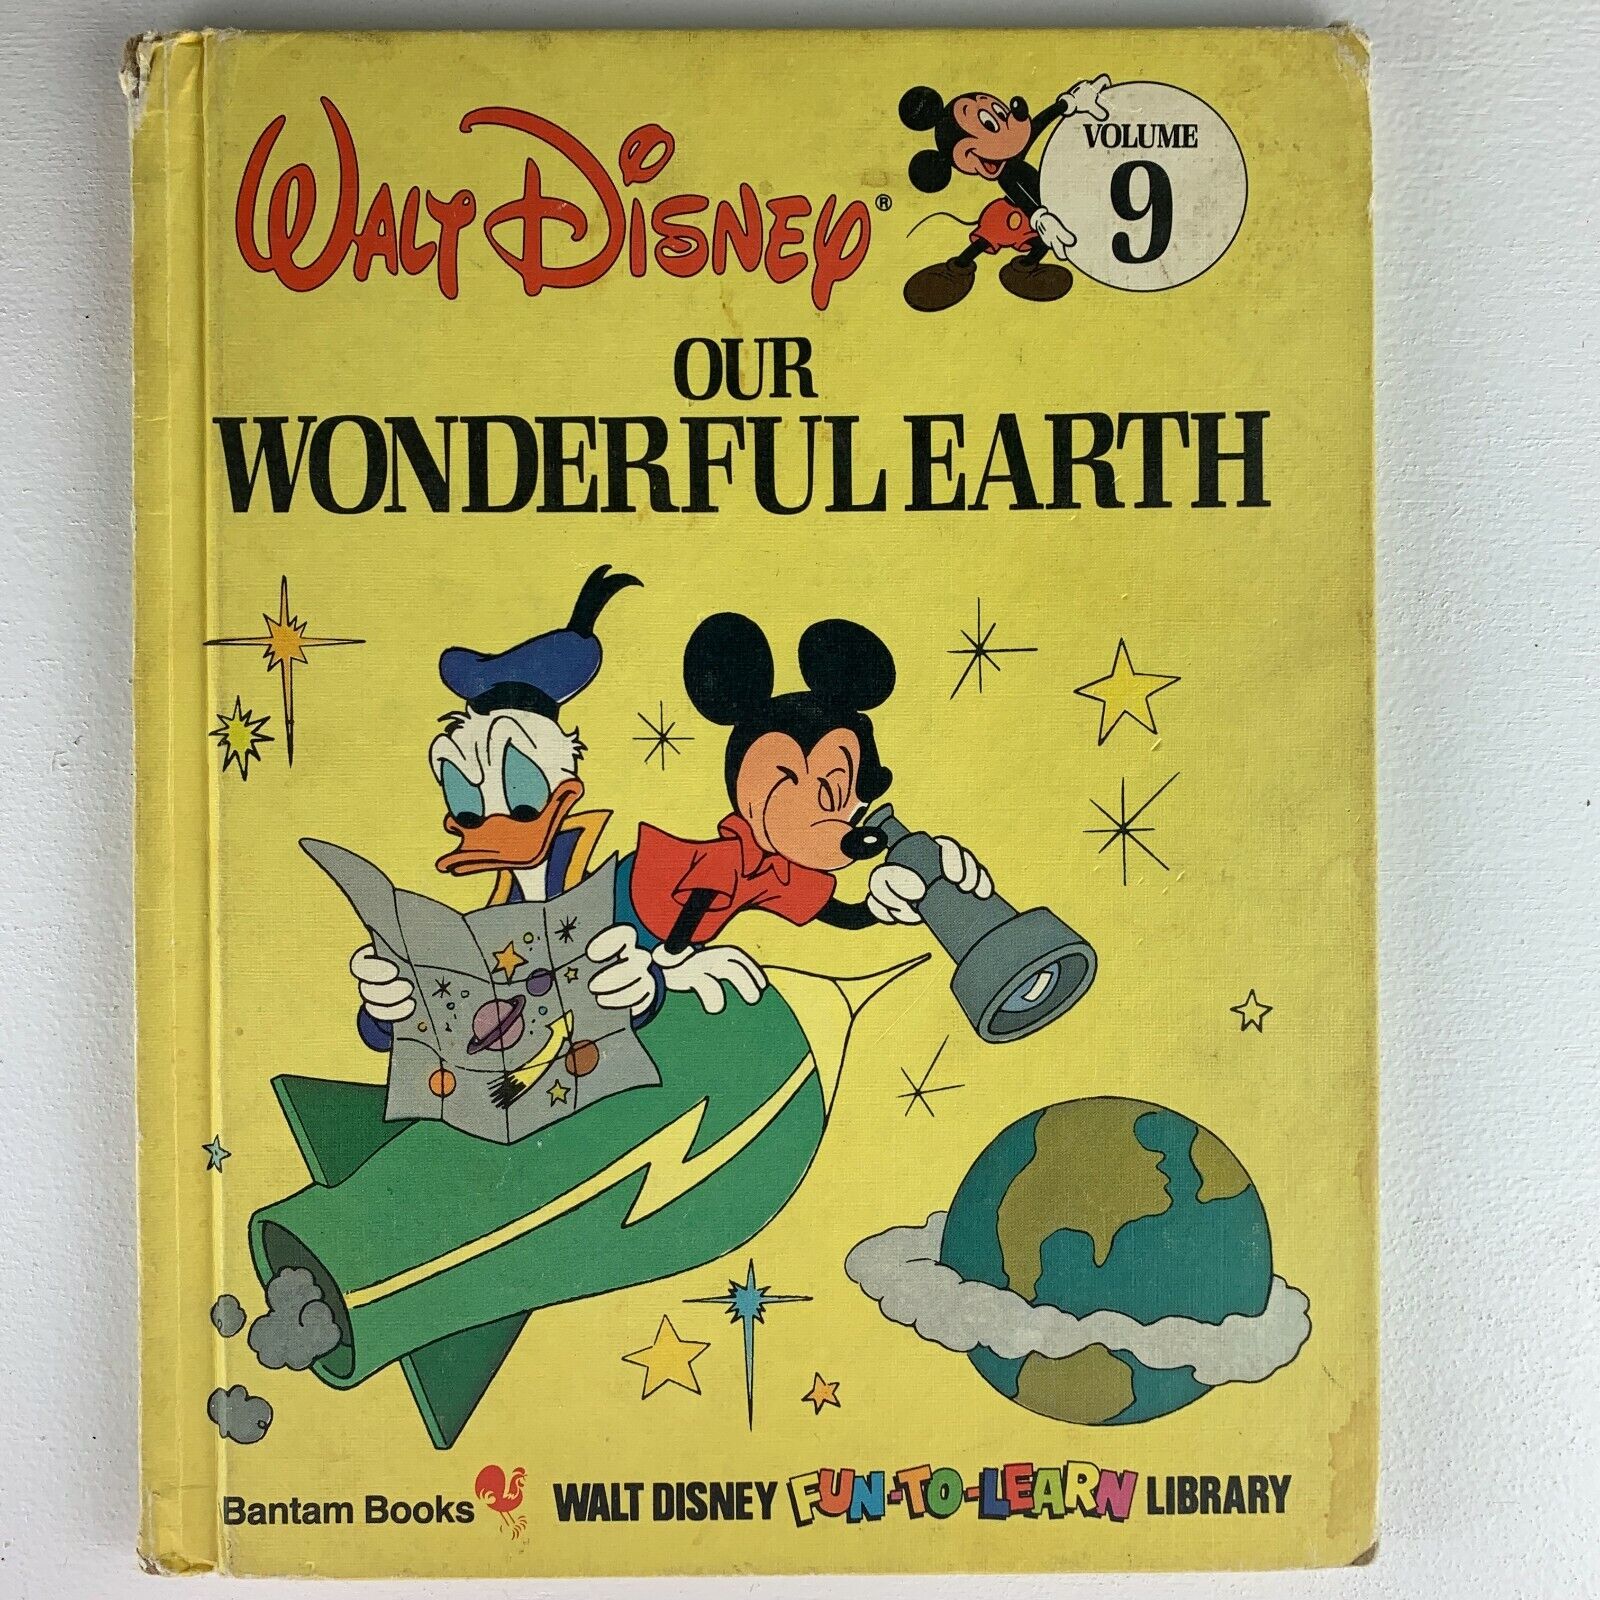 Walt Disney Bantam book - Our wonderful earth (Volume 9) (1984)